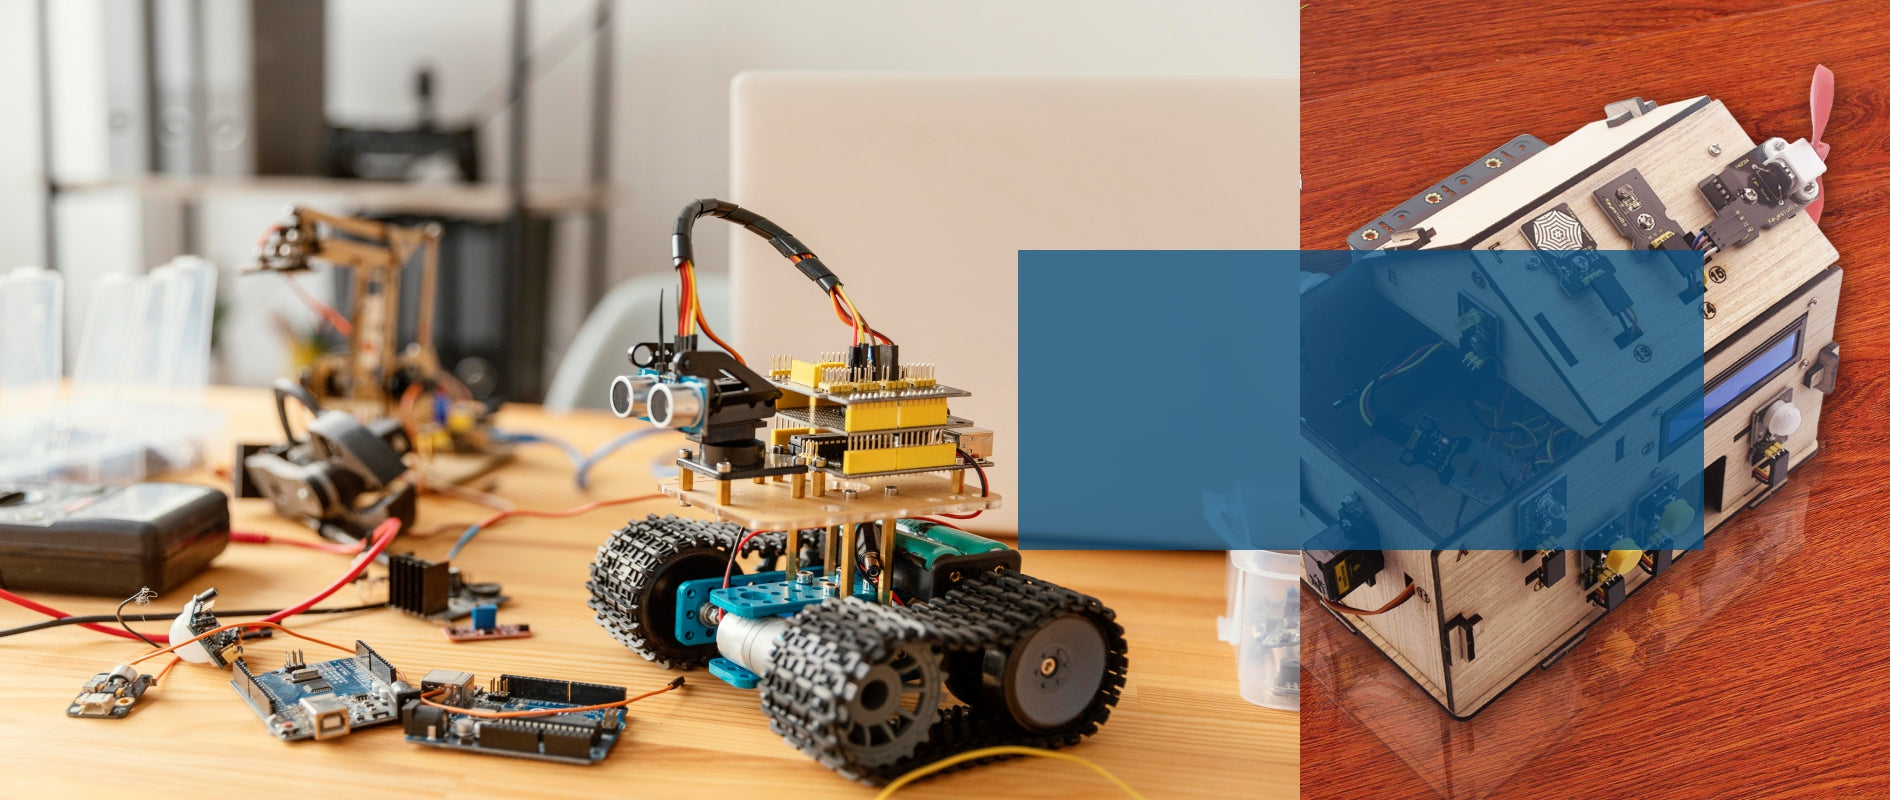 Keyestudio Upgraded 4WD BT Multi-purpose Smart Car V2.0 for Arduino Robot  Kit Programming DIY Robot Car